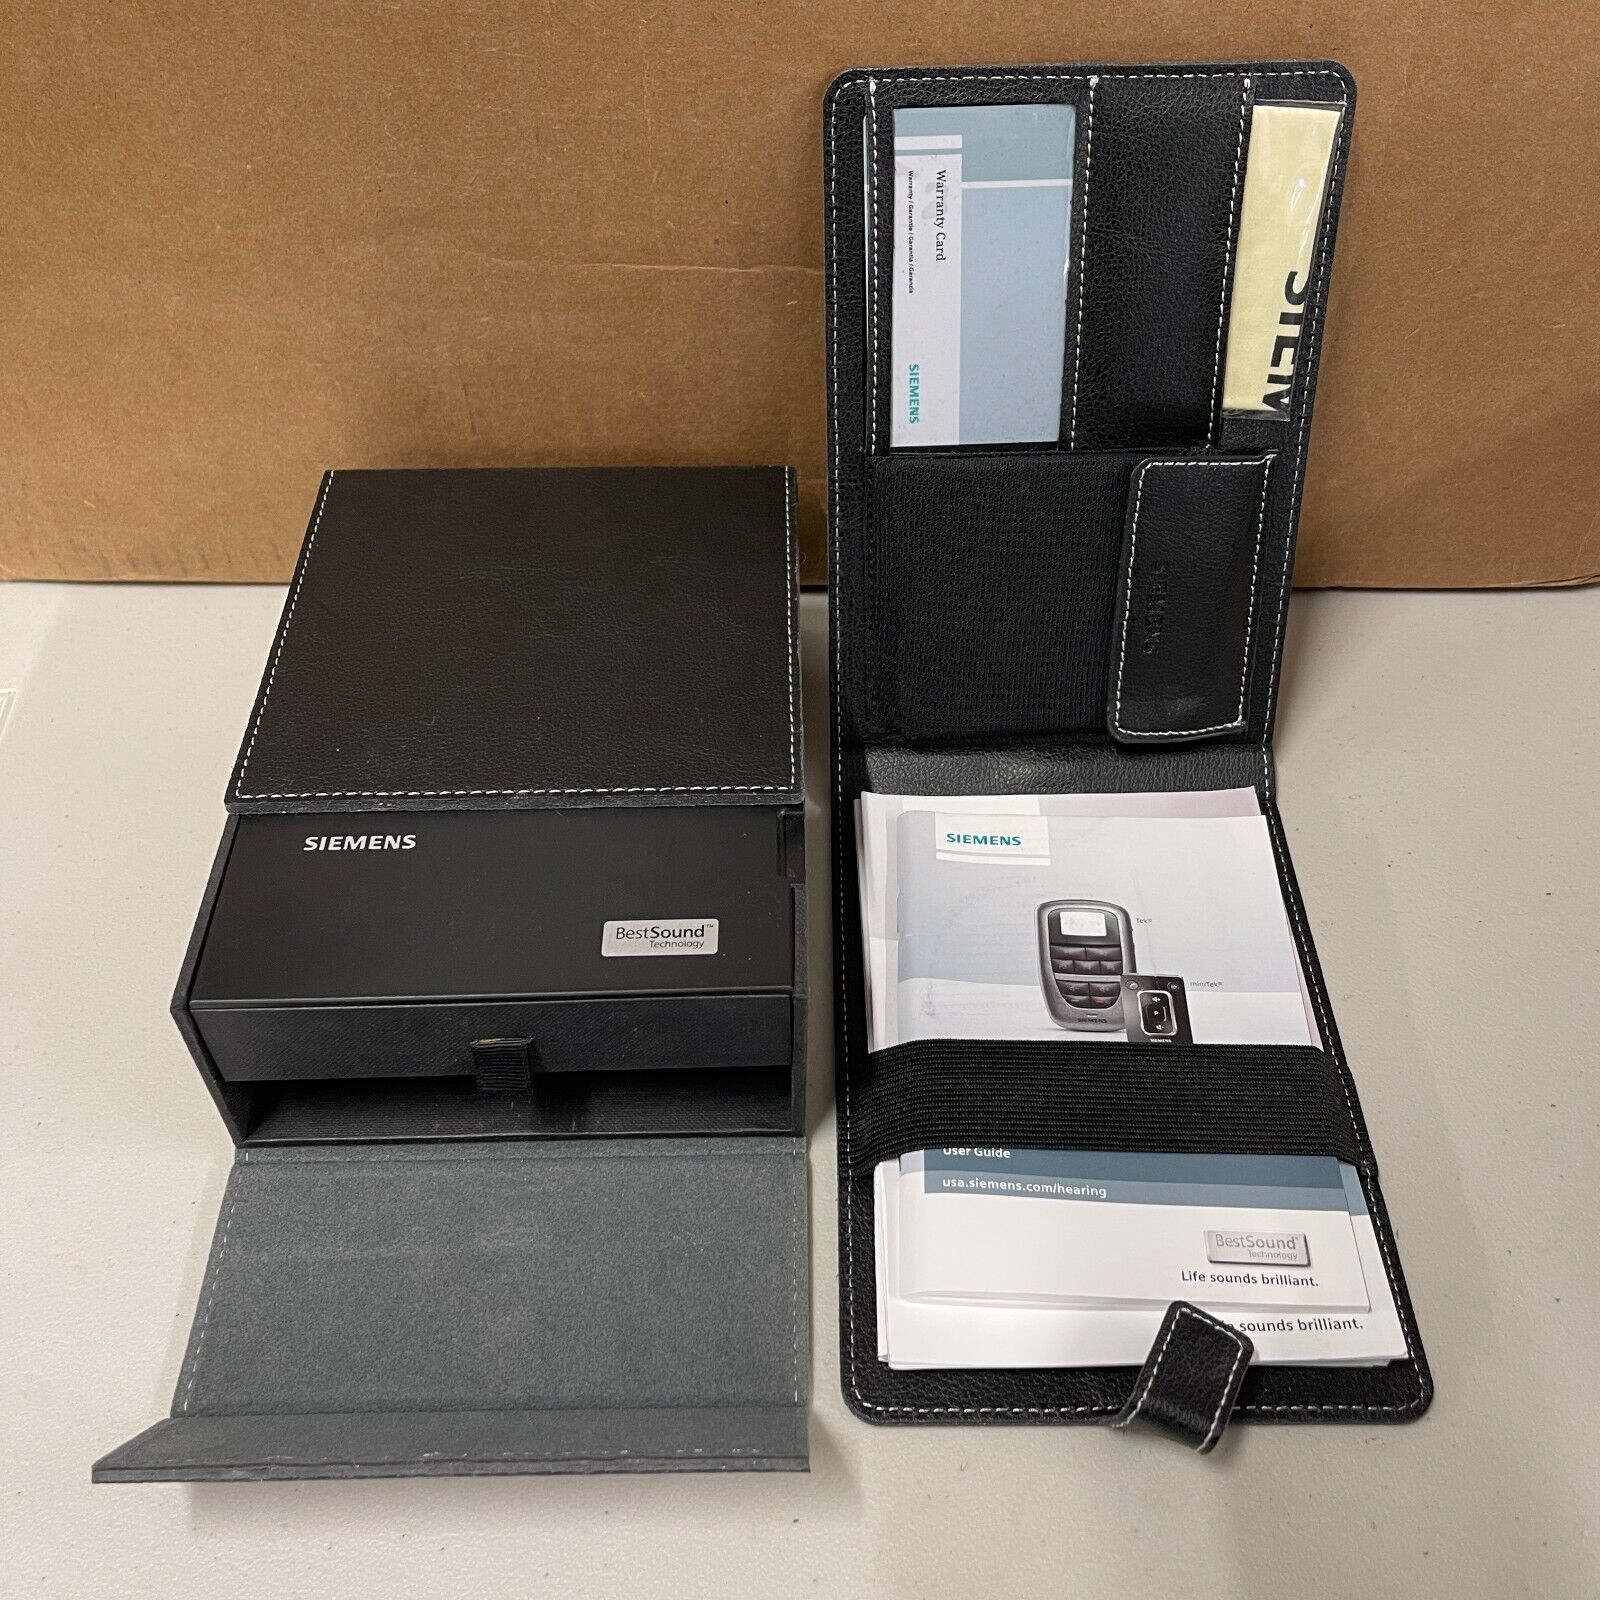 Siemens miniTek Wireless Enhancement System Carrying Case Booklets NO DEVICE - $46.30